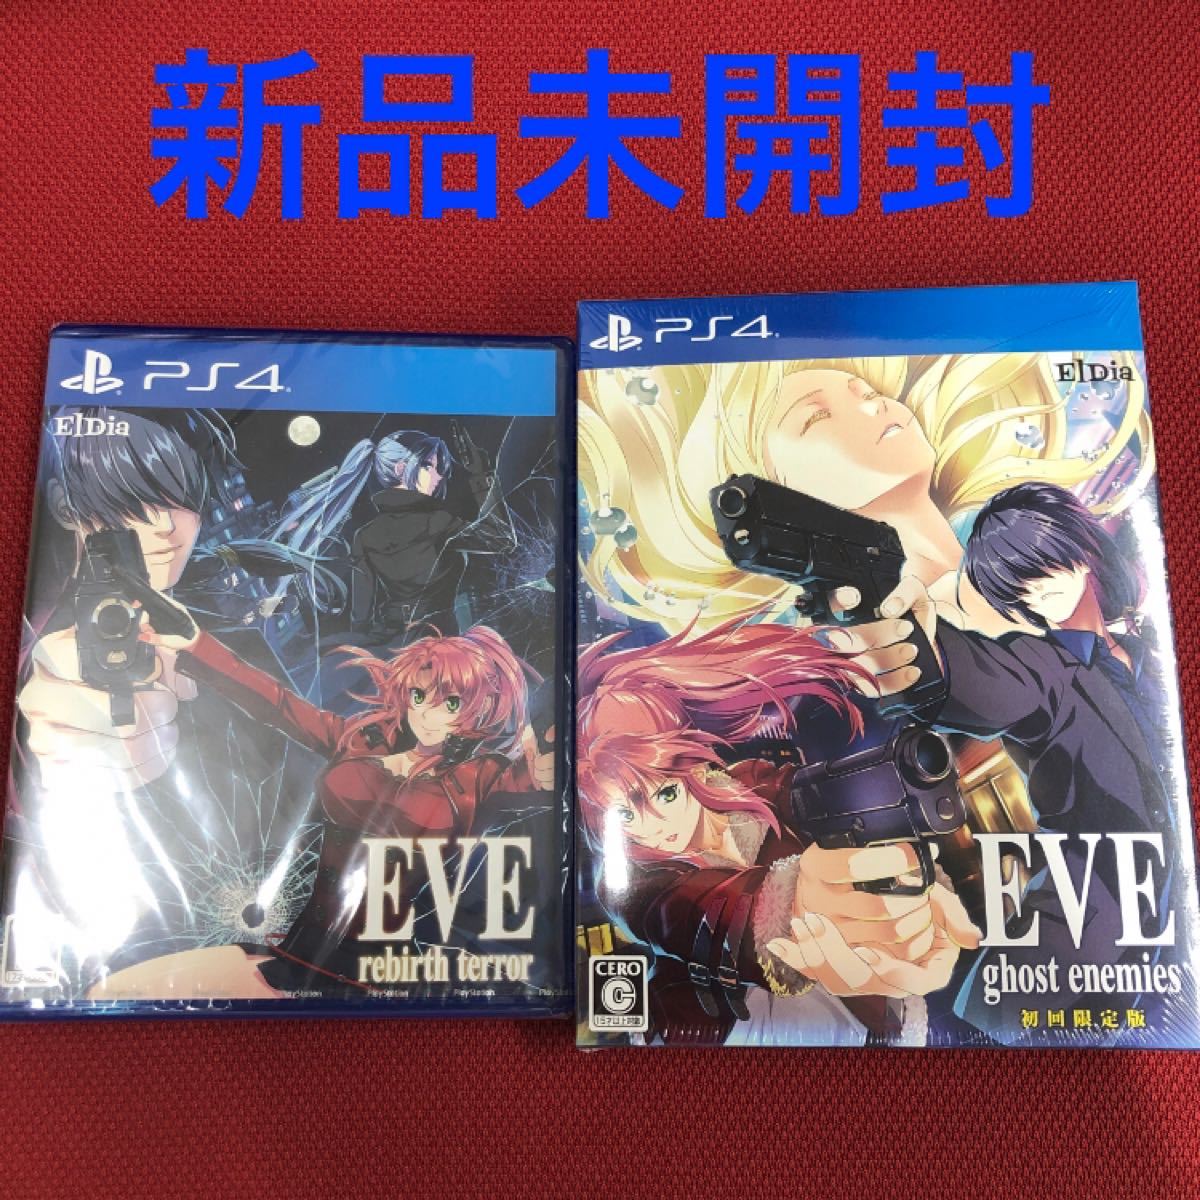 PS4】 EVE ghost enemies [初回限定版] rebirth terror 新品未開封 2本